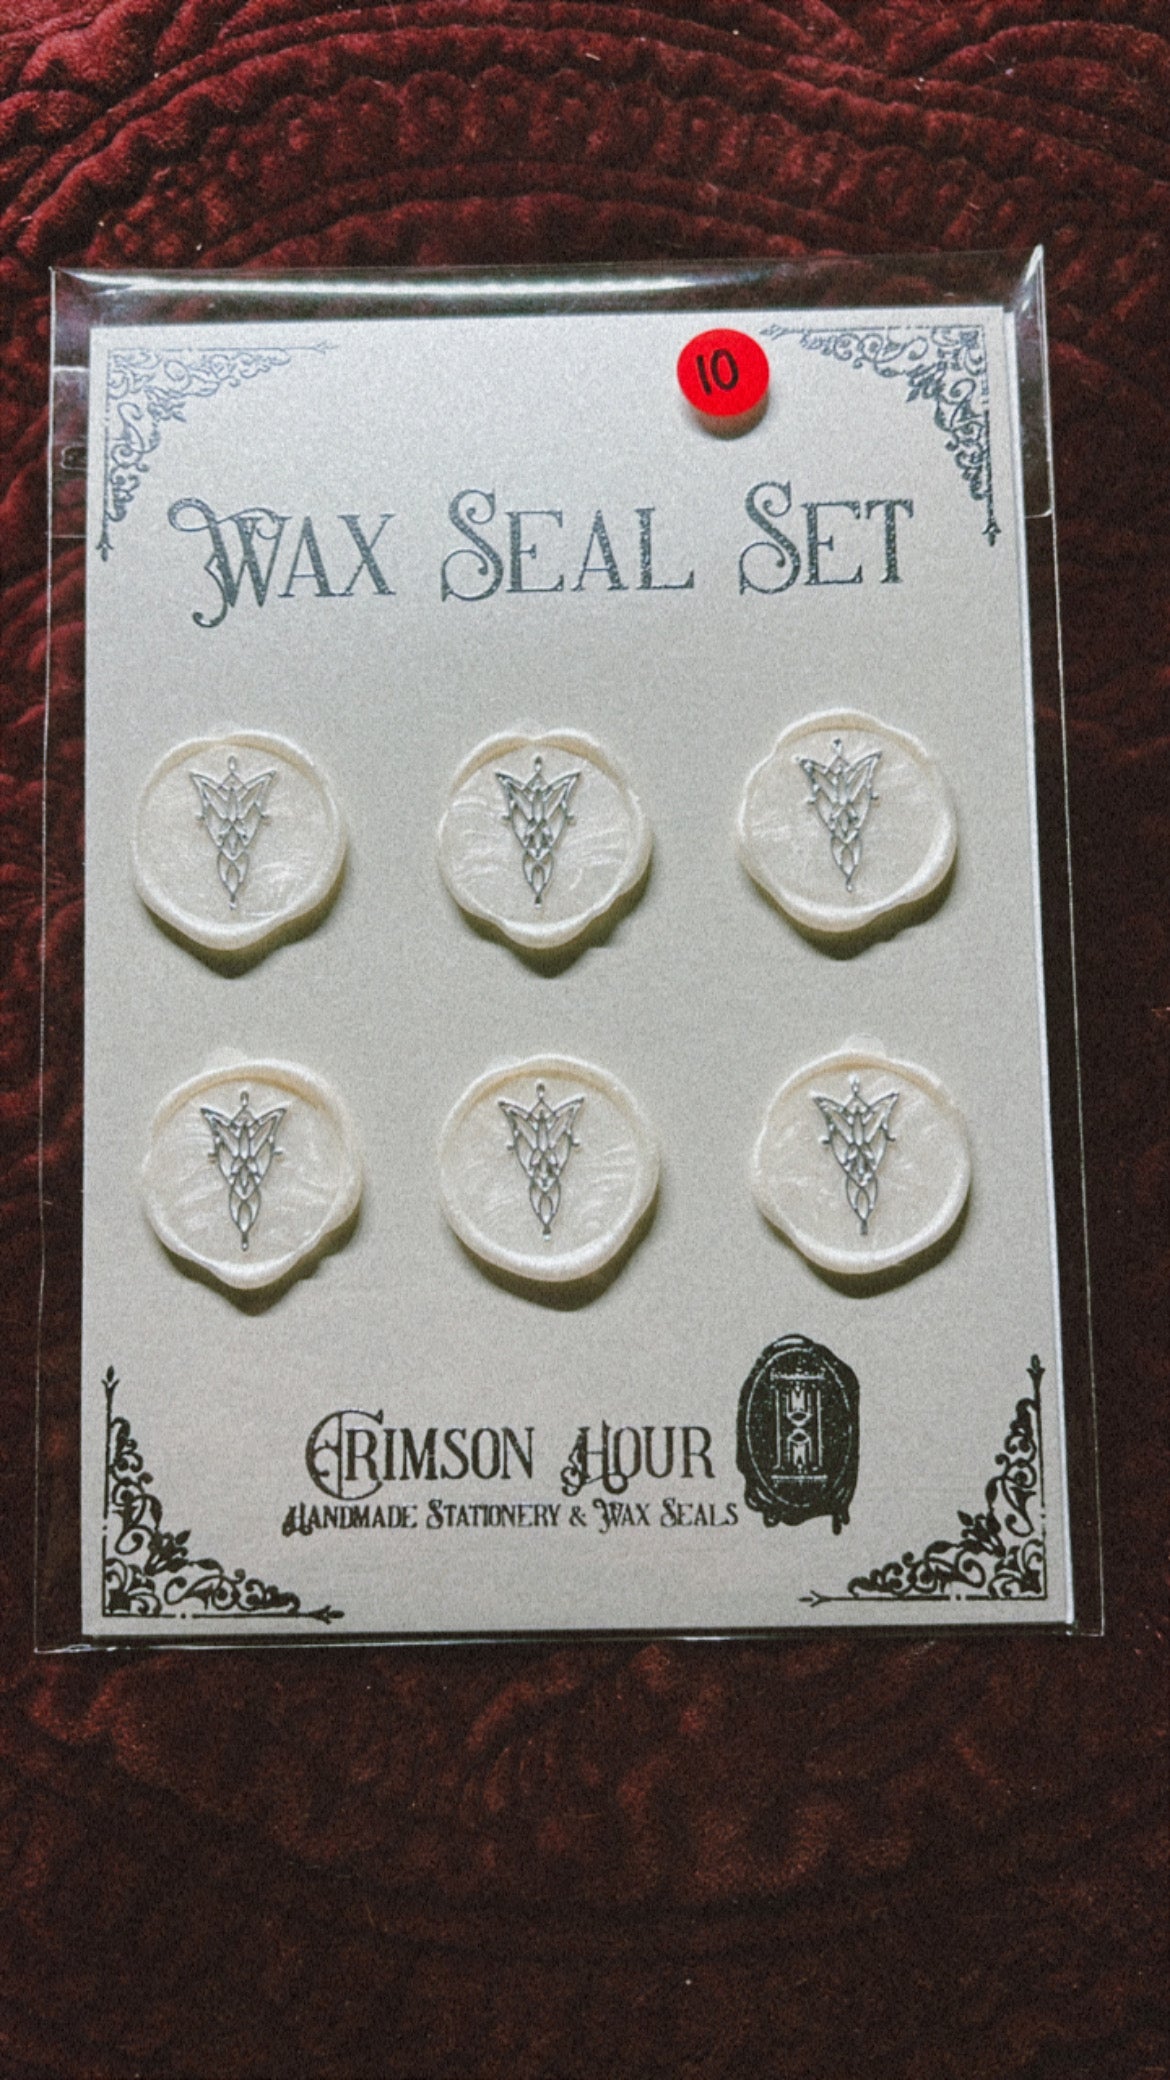 Ready To Ship - Wax Seal Sets